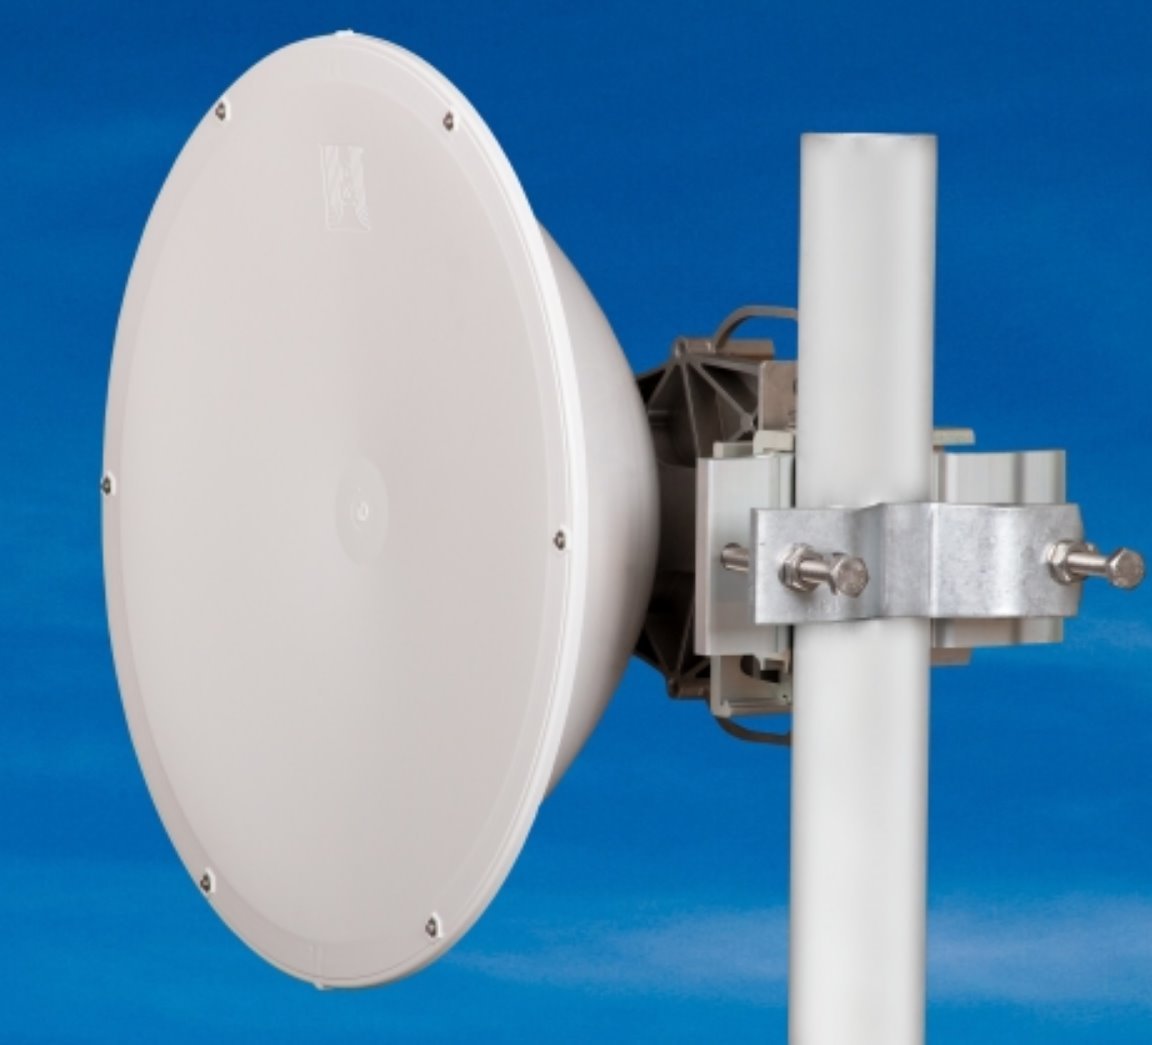 Jirous JRMC-400-10/11 Al parabolic antenna with precision mount for Alcoma radio units